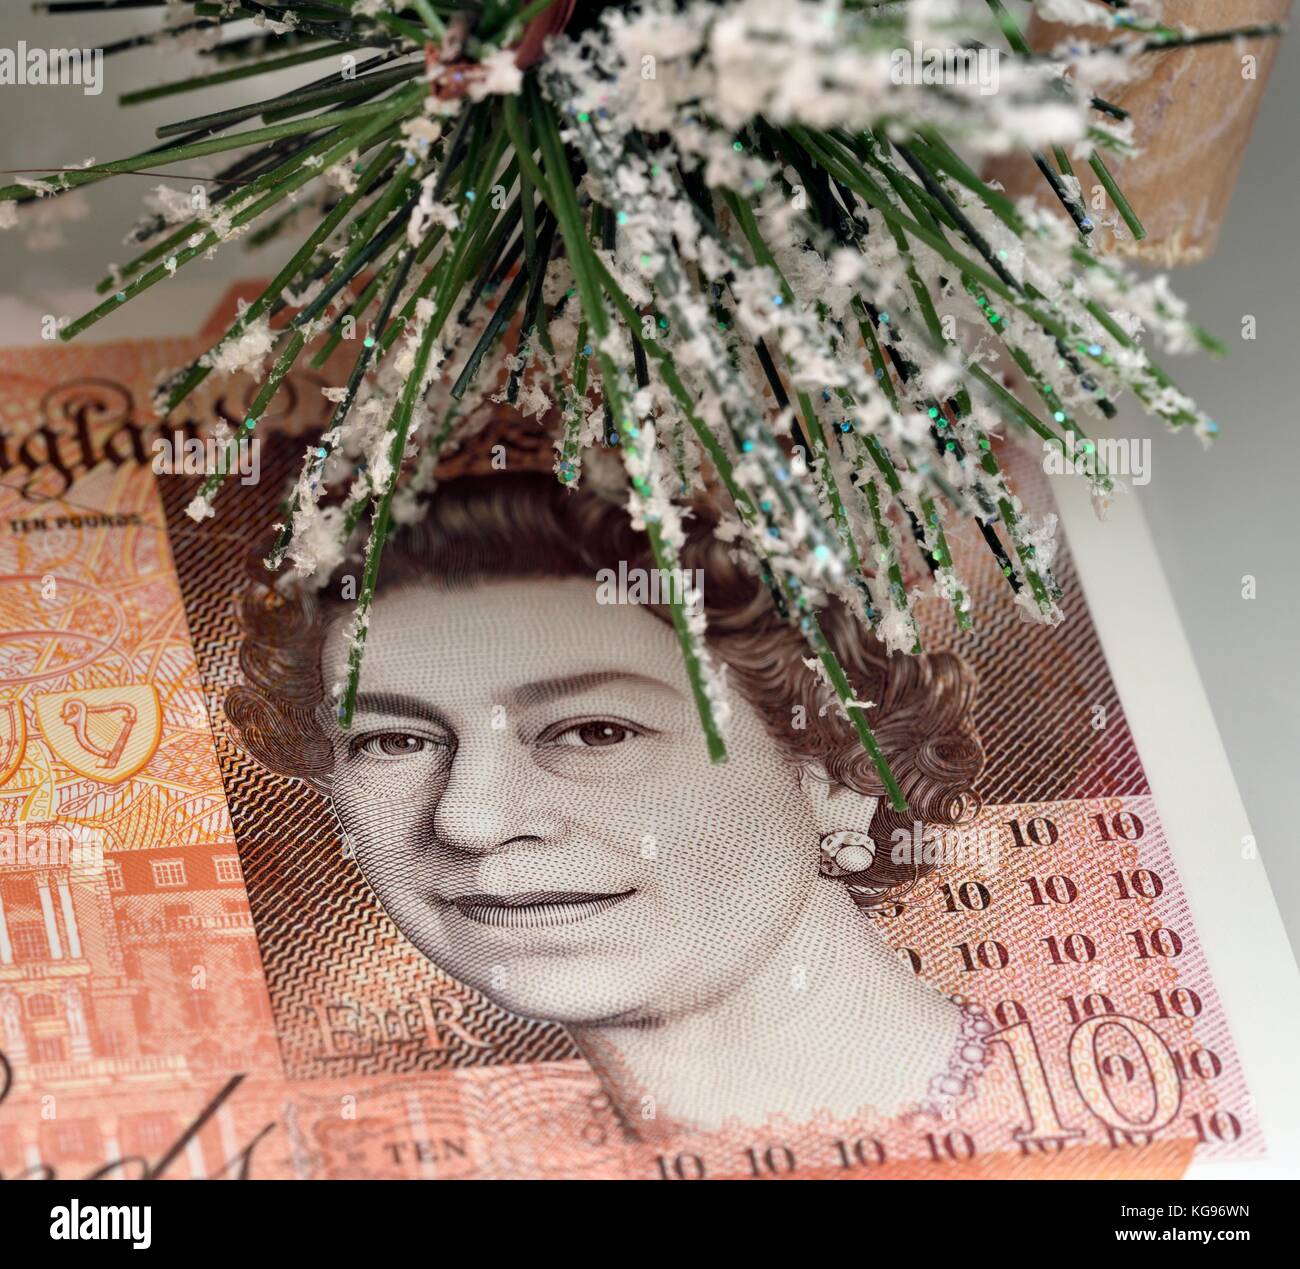 Weihnachten Geld Queens Head Stockfoto